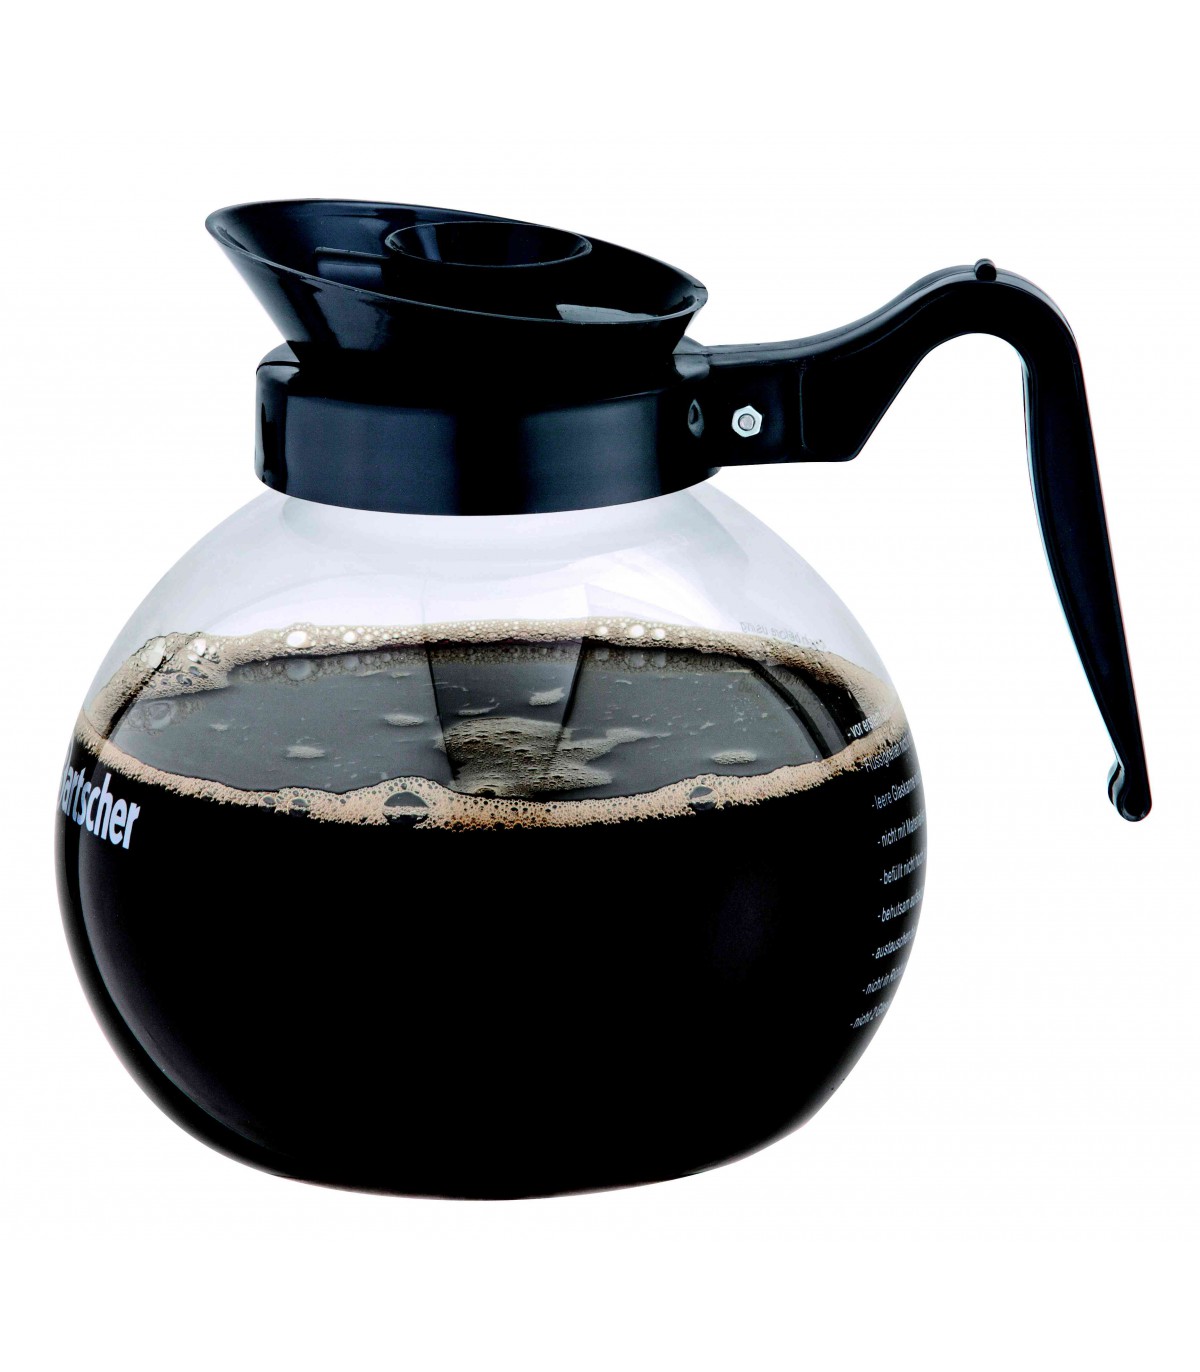 Стеклянная колба для кофеварки. Колба для кофеварки Zauber s-410. Vivax cm-08127w кофеварка стеклянный кувшин. Колба для кофеварка Delta Lux DL-8161 черная. Чайник для кофеварки.